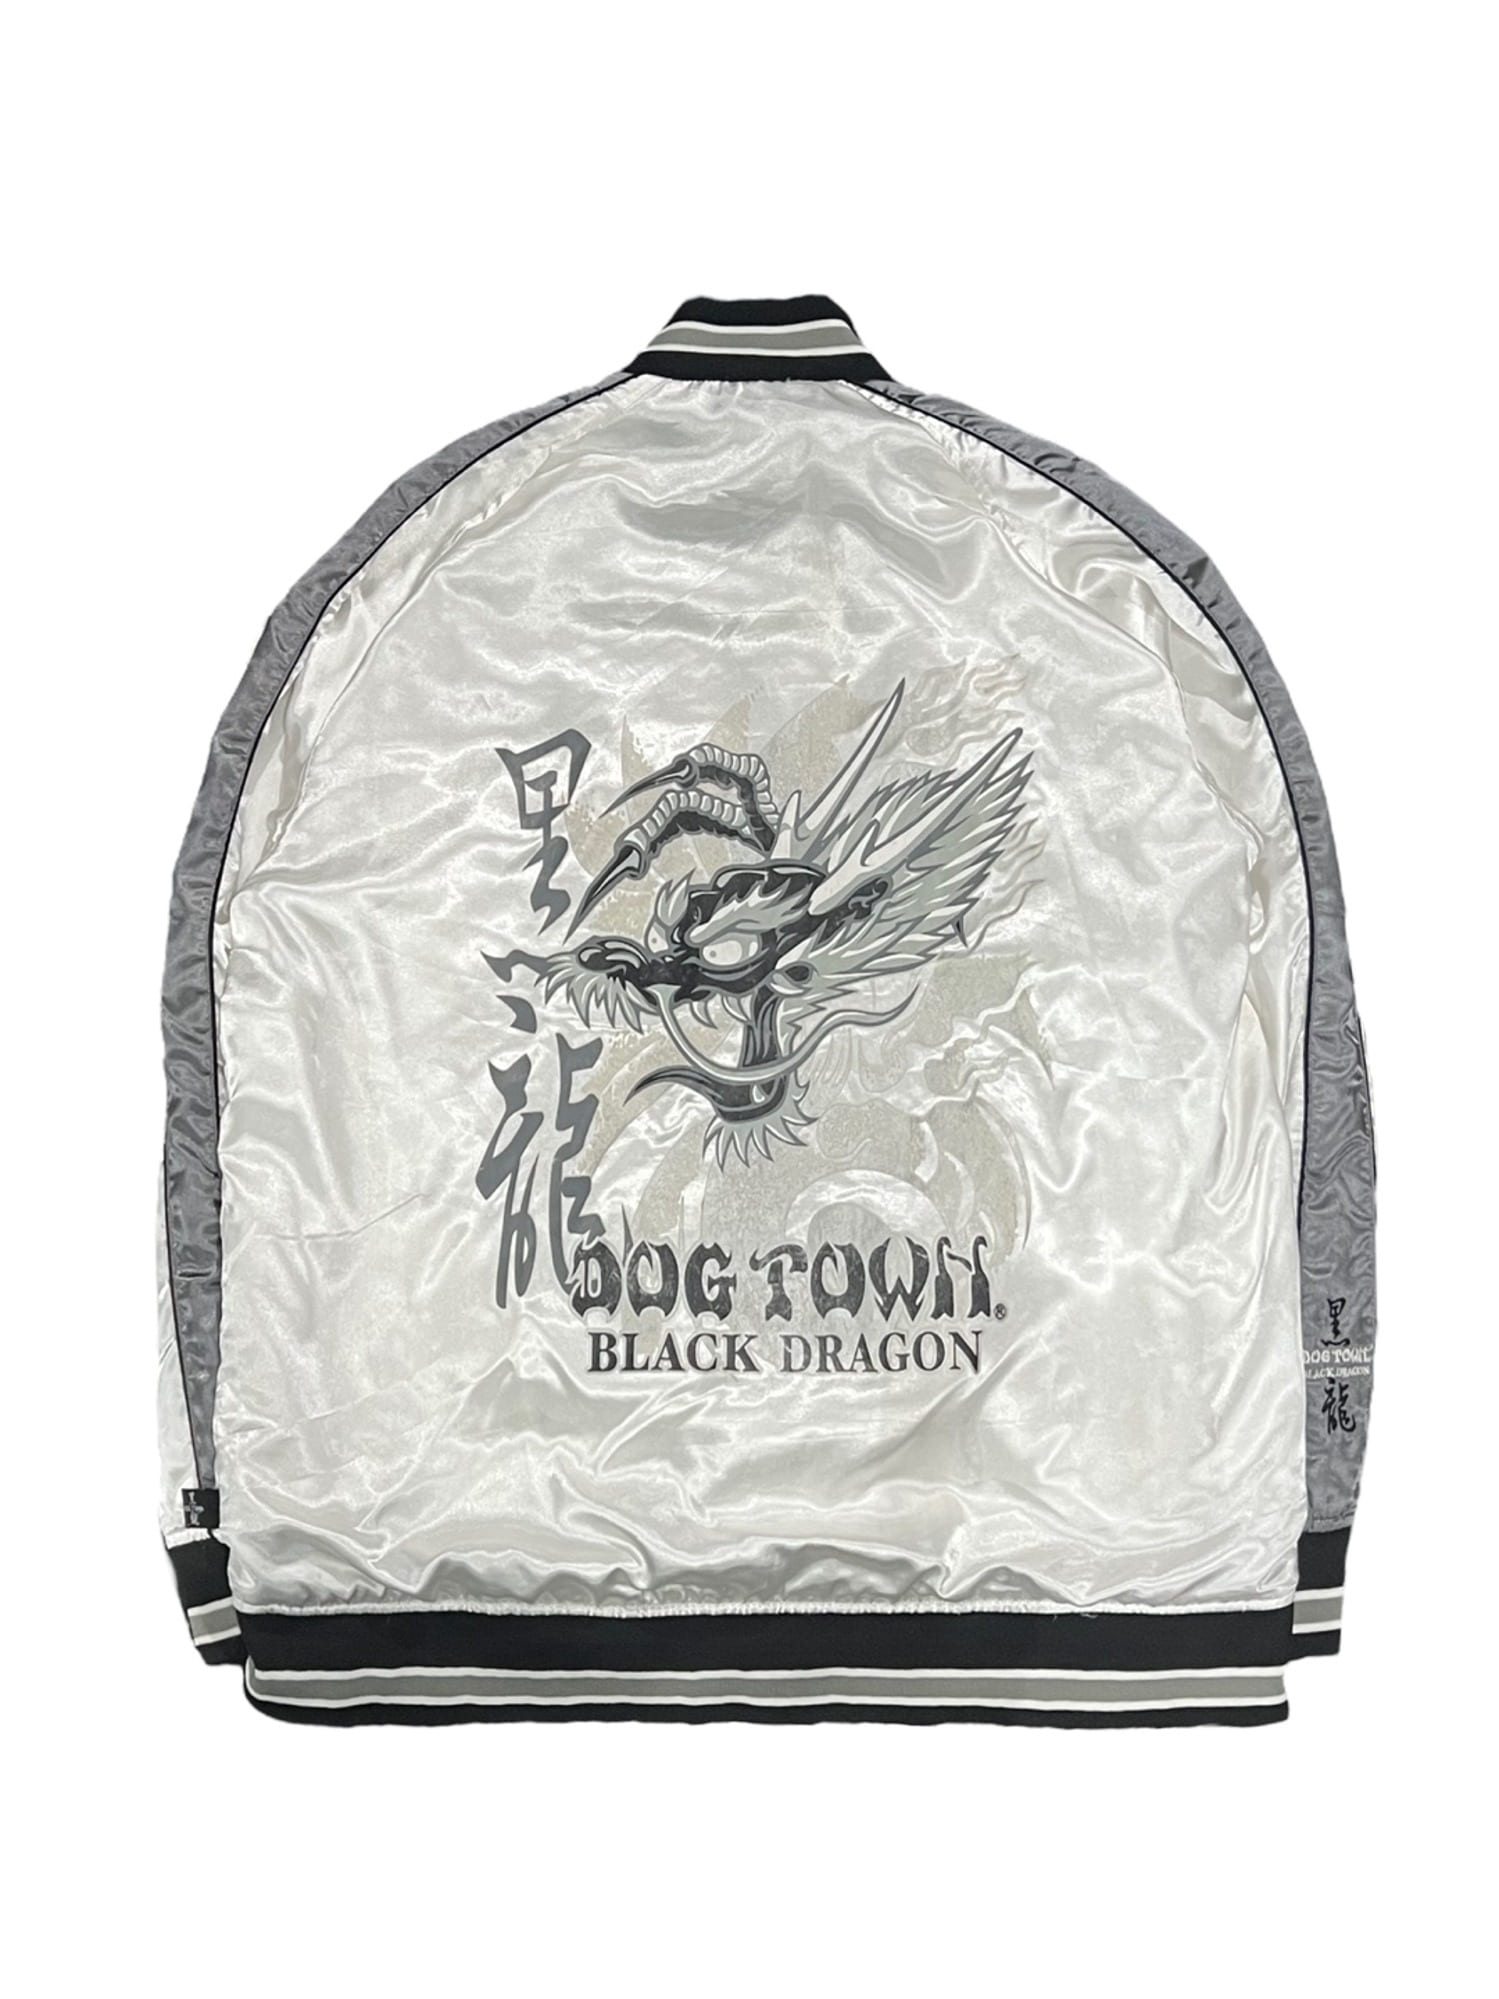 DOGTOWN Black Dragon Overfit Silver Sukajan Jacket XL